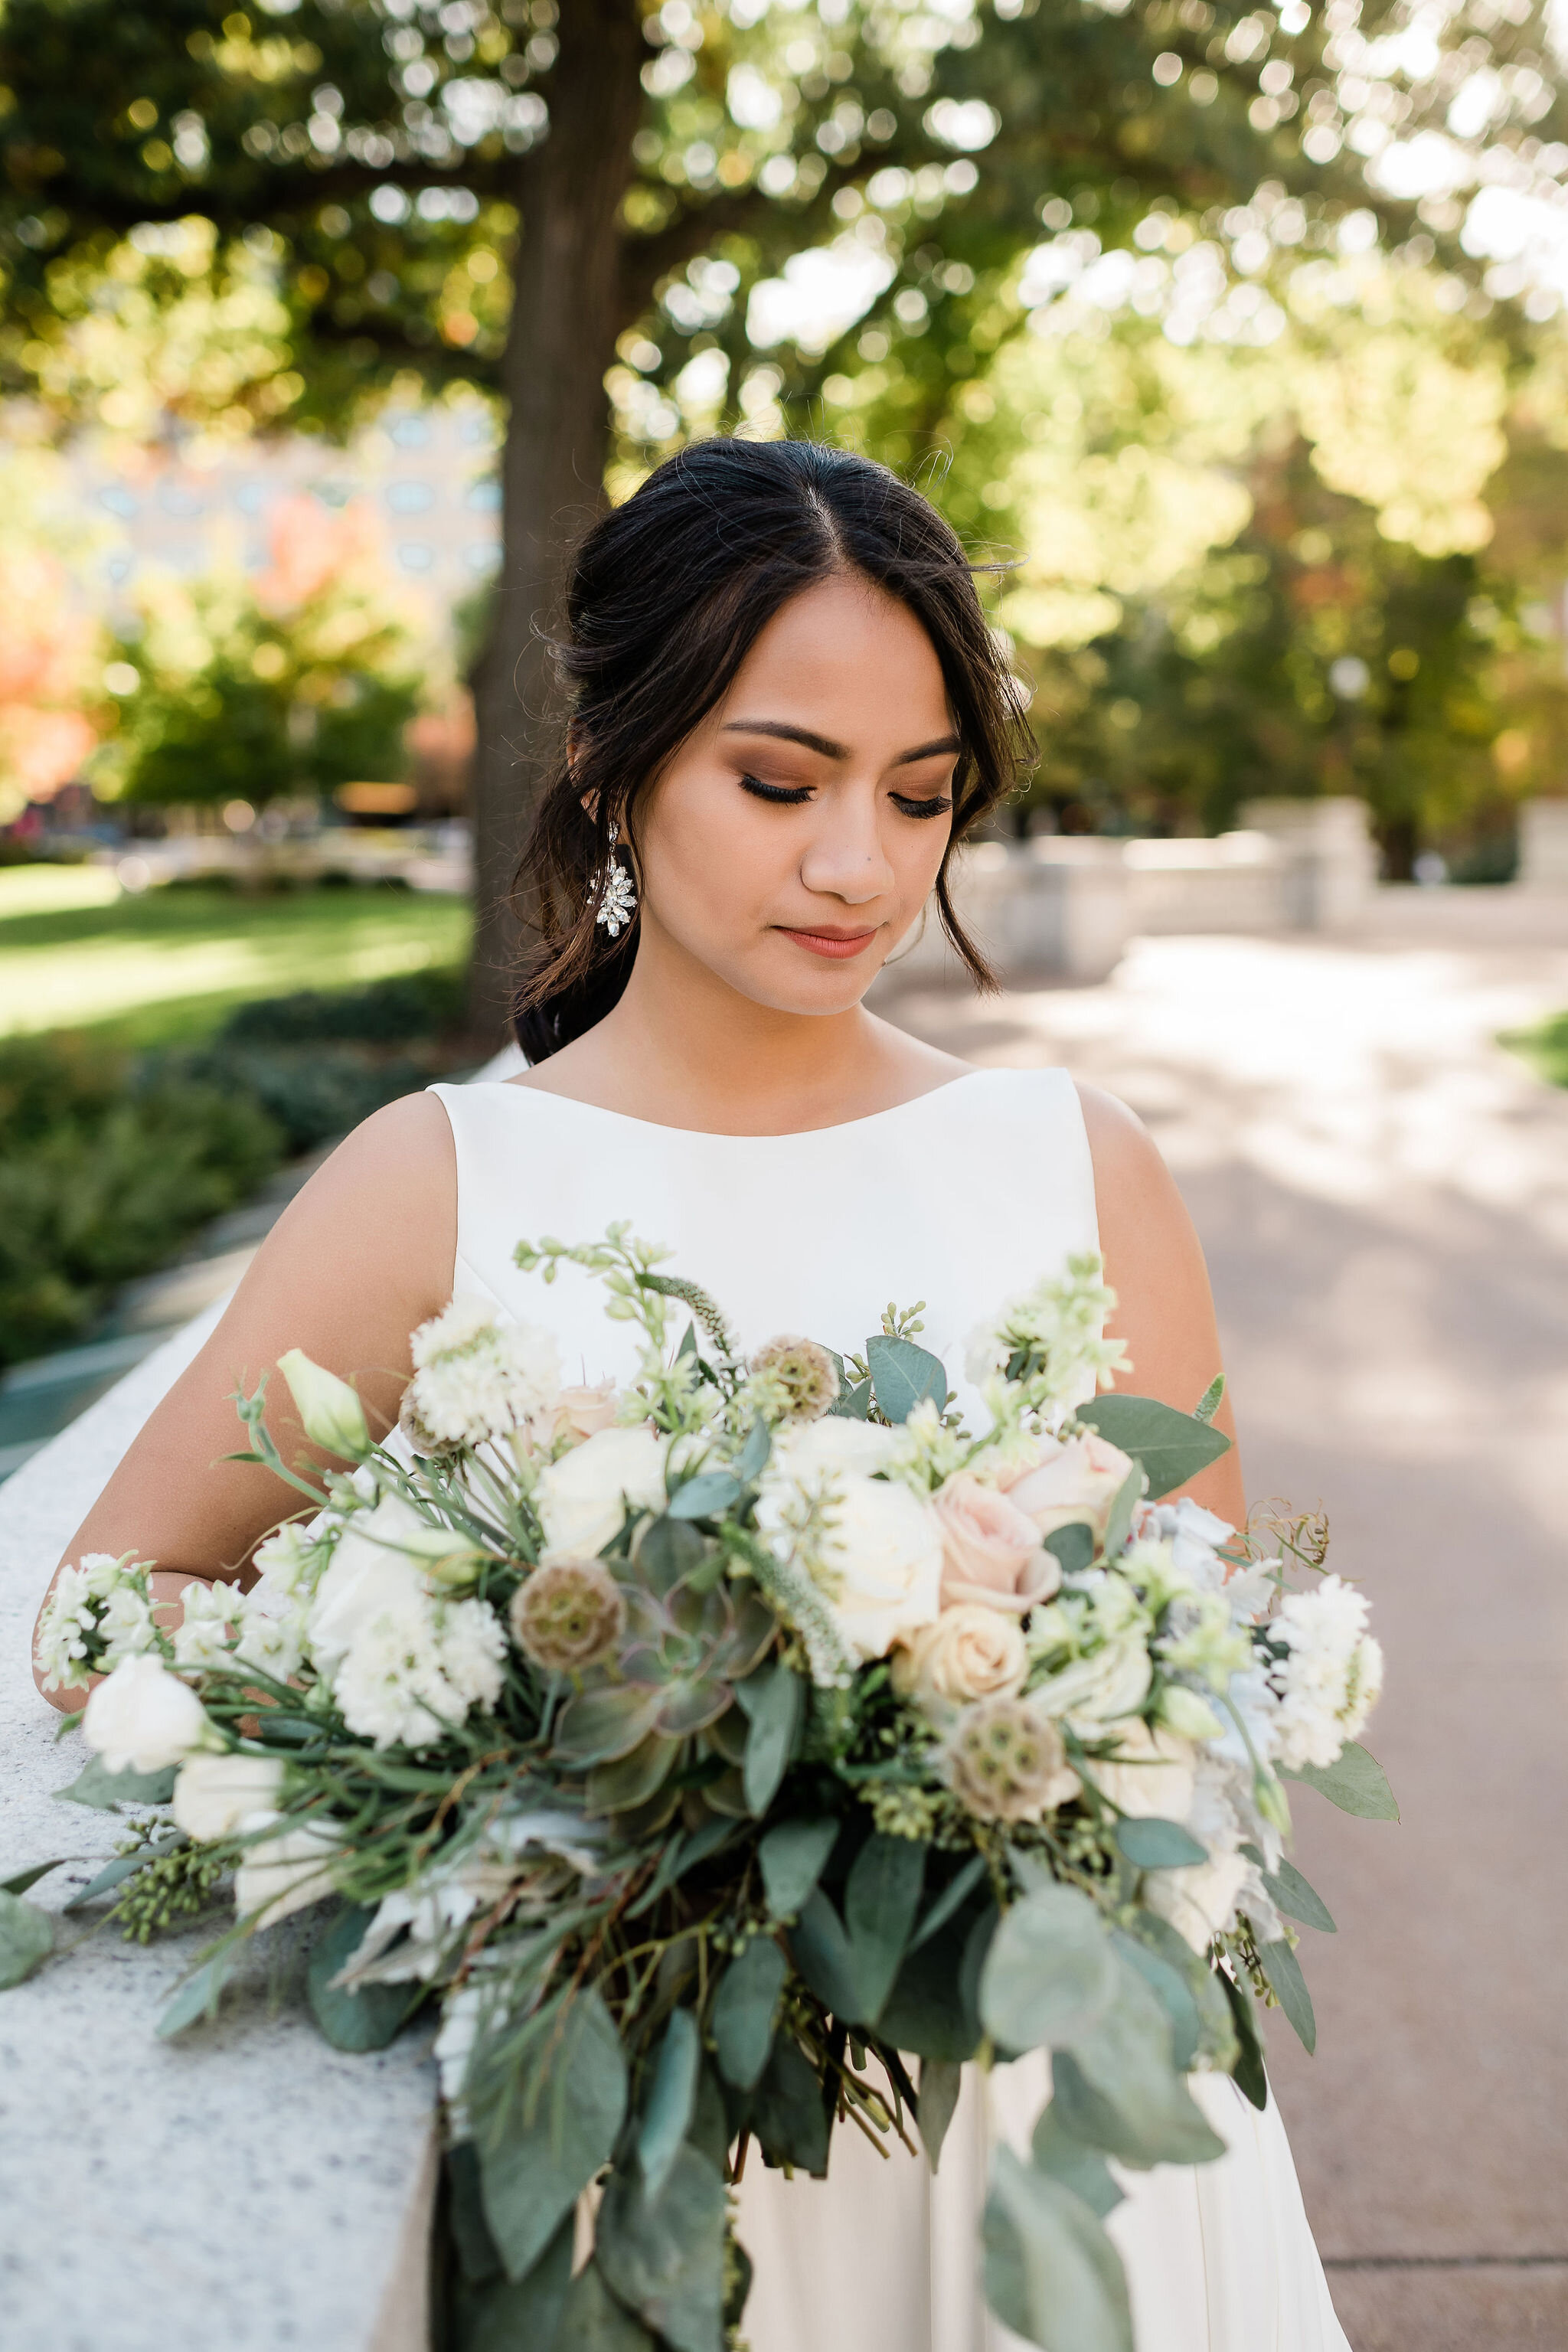 Bride looking at her flowers